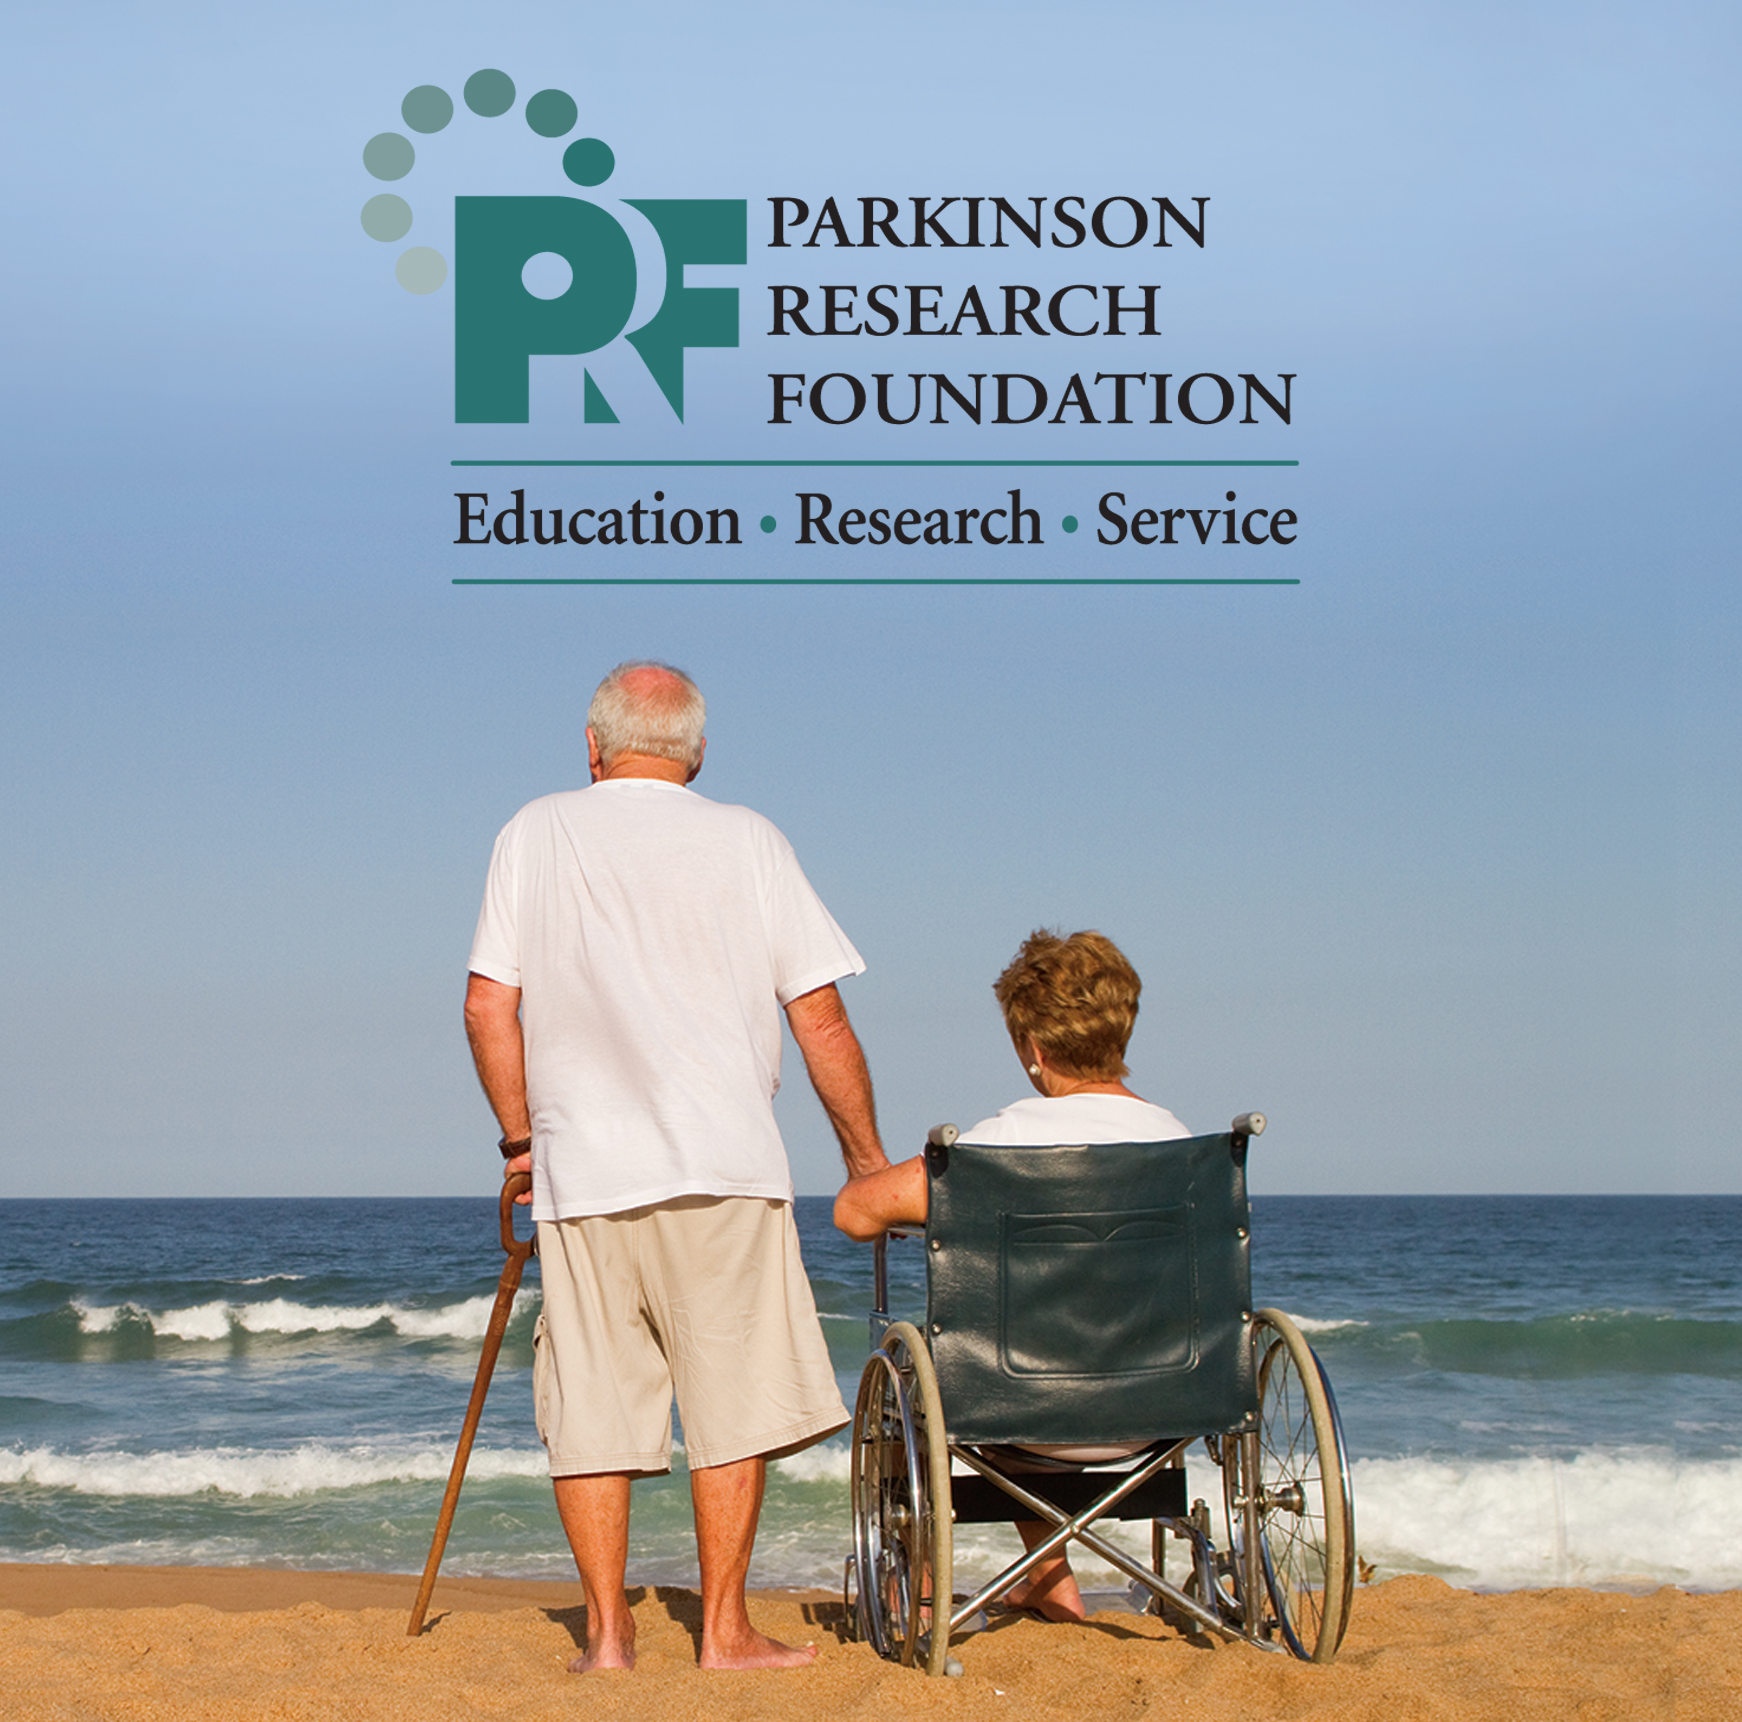 Parkinson Research Foundation